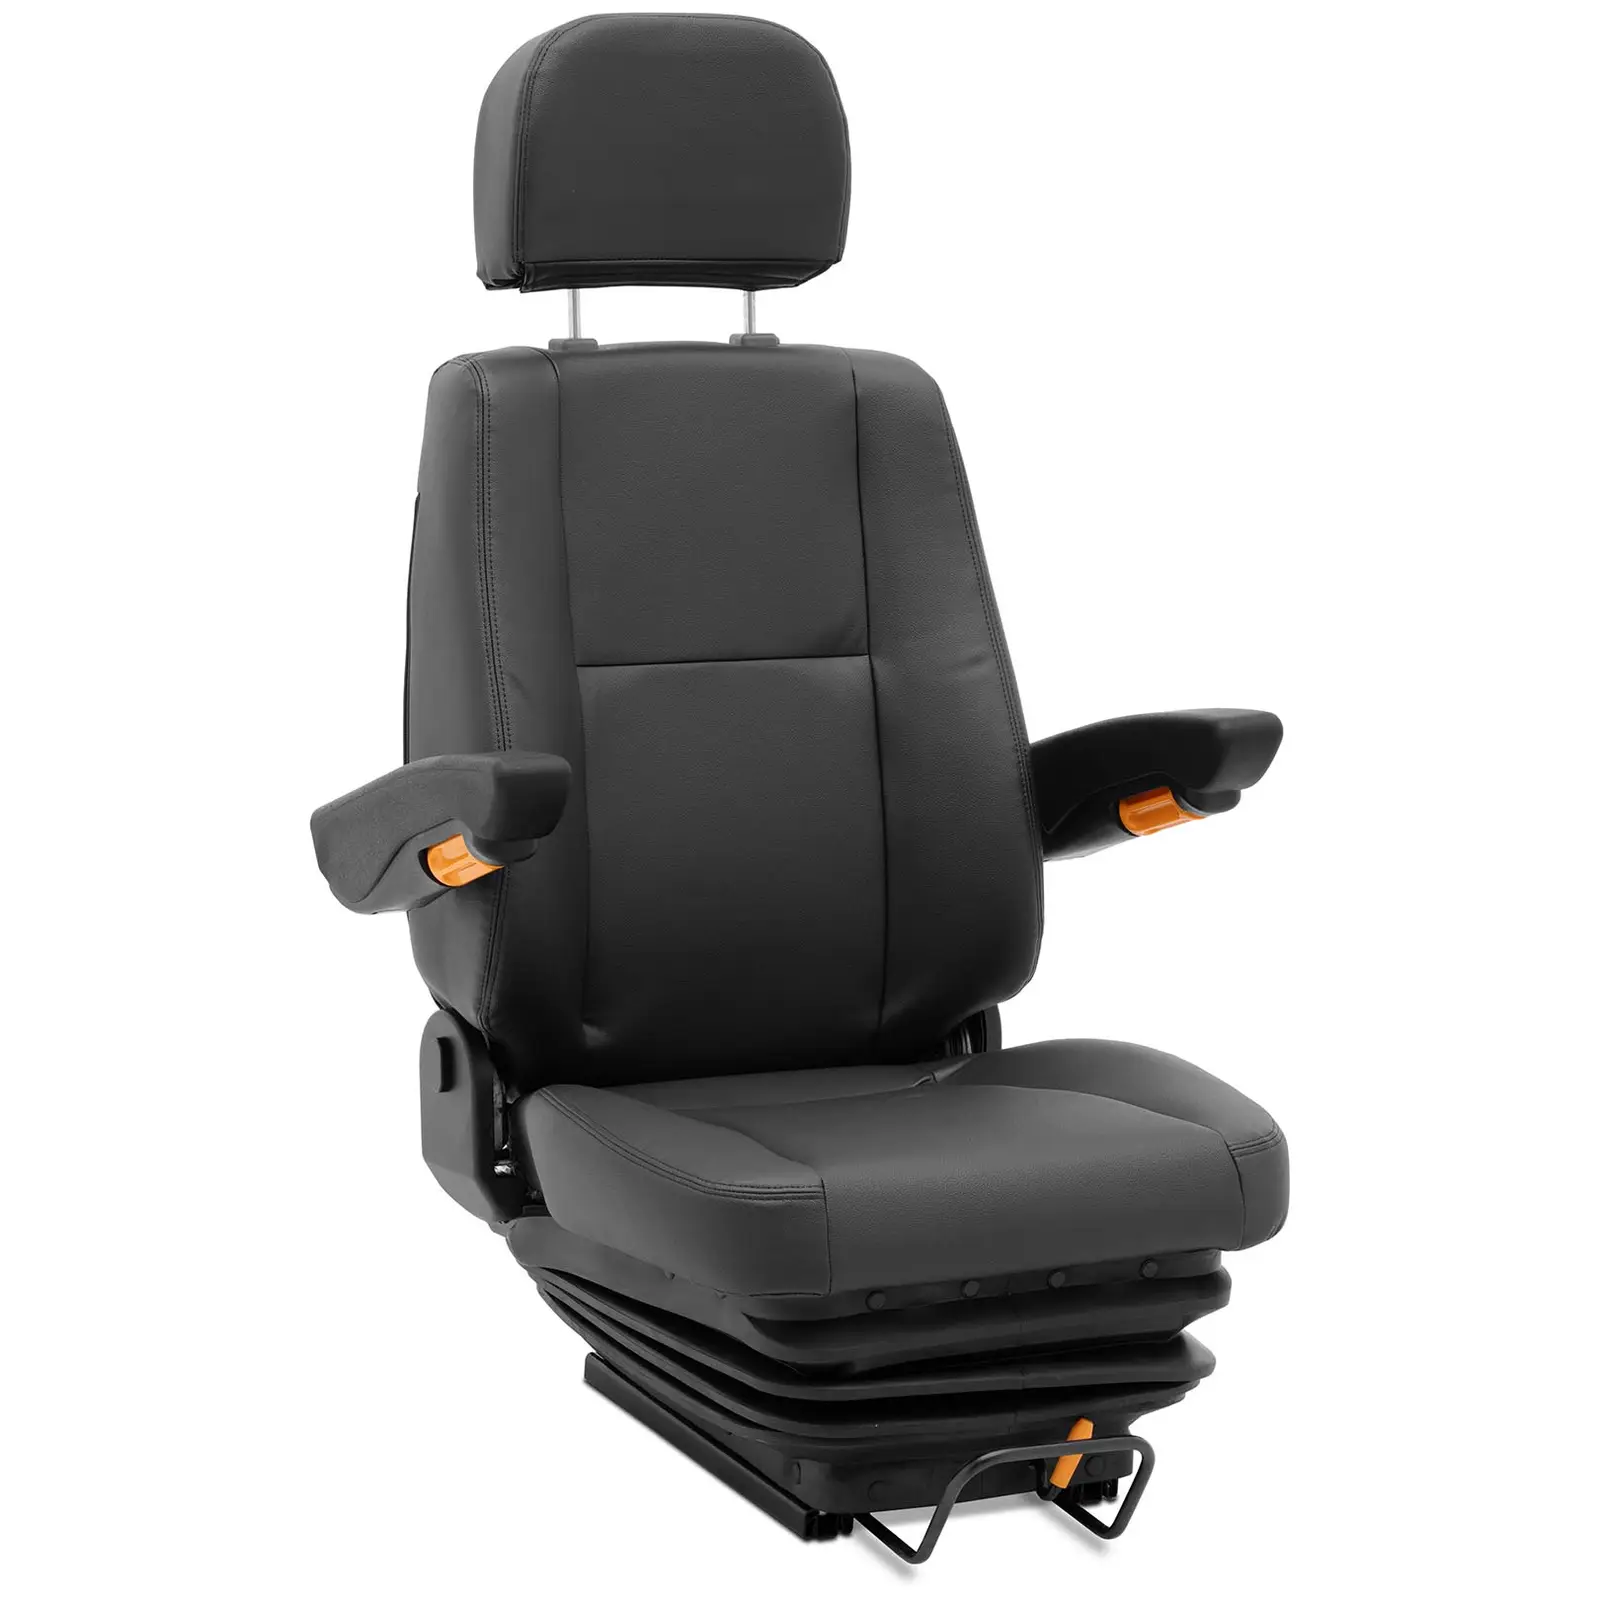 Tractor seat - 51 x 50 cm - adjustable - suspension